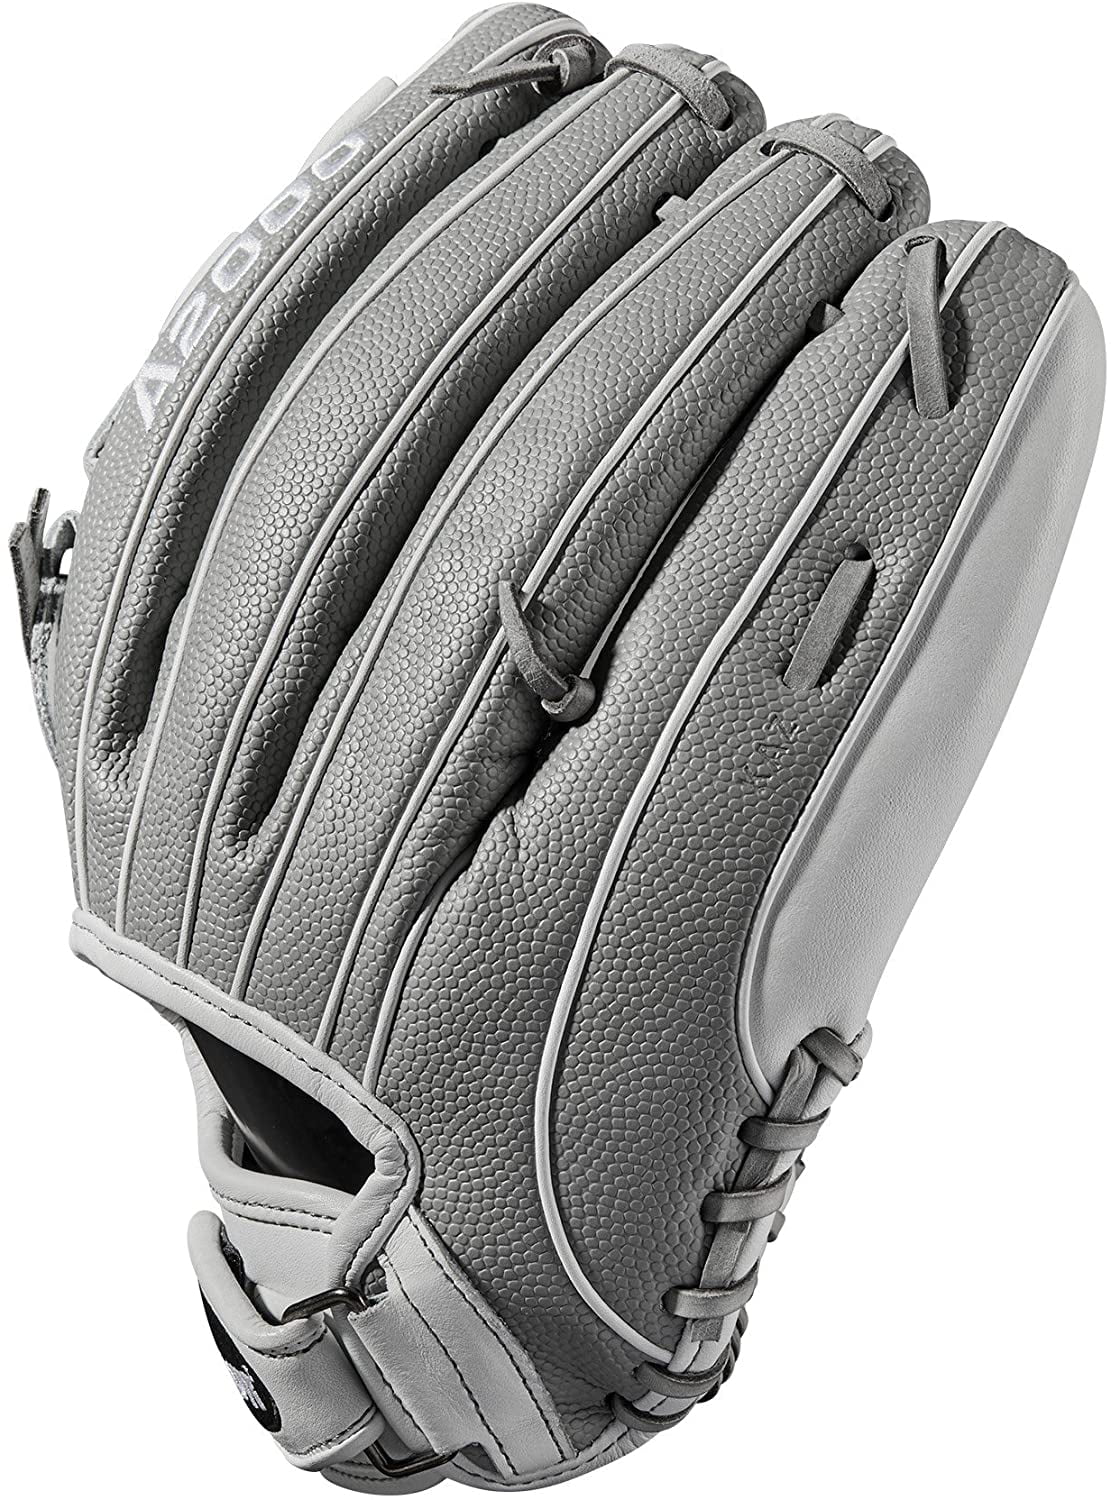 2020 LHT Lefty Wilson Wta20lf19p12 12" A2000 Fastpitch Softball Glove Pitcher for sale online 